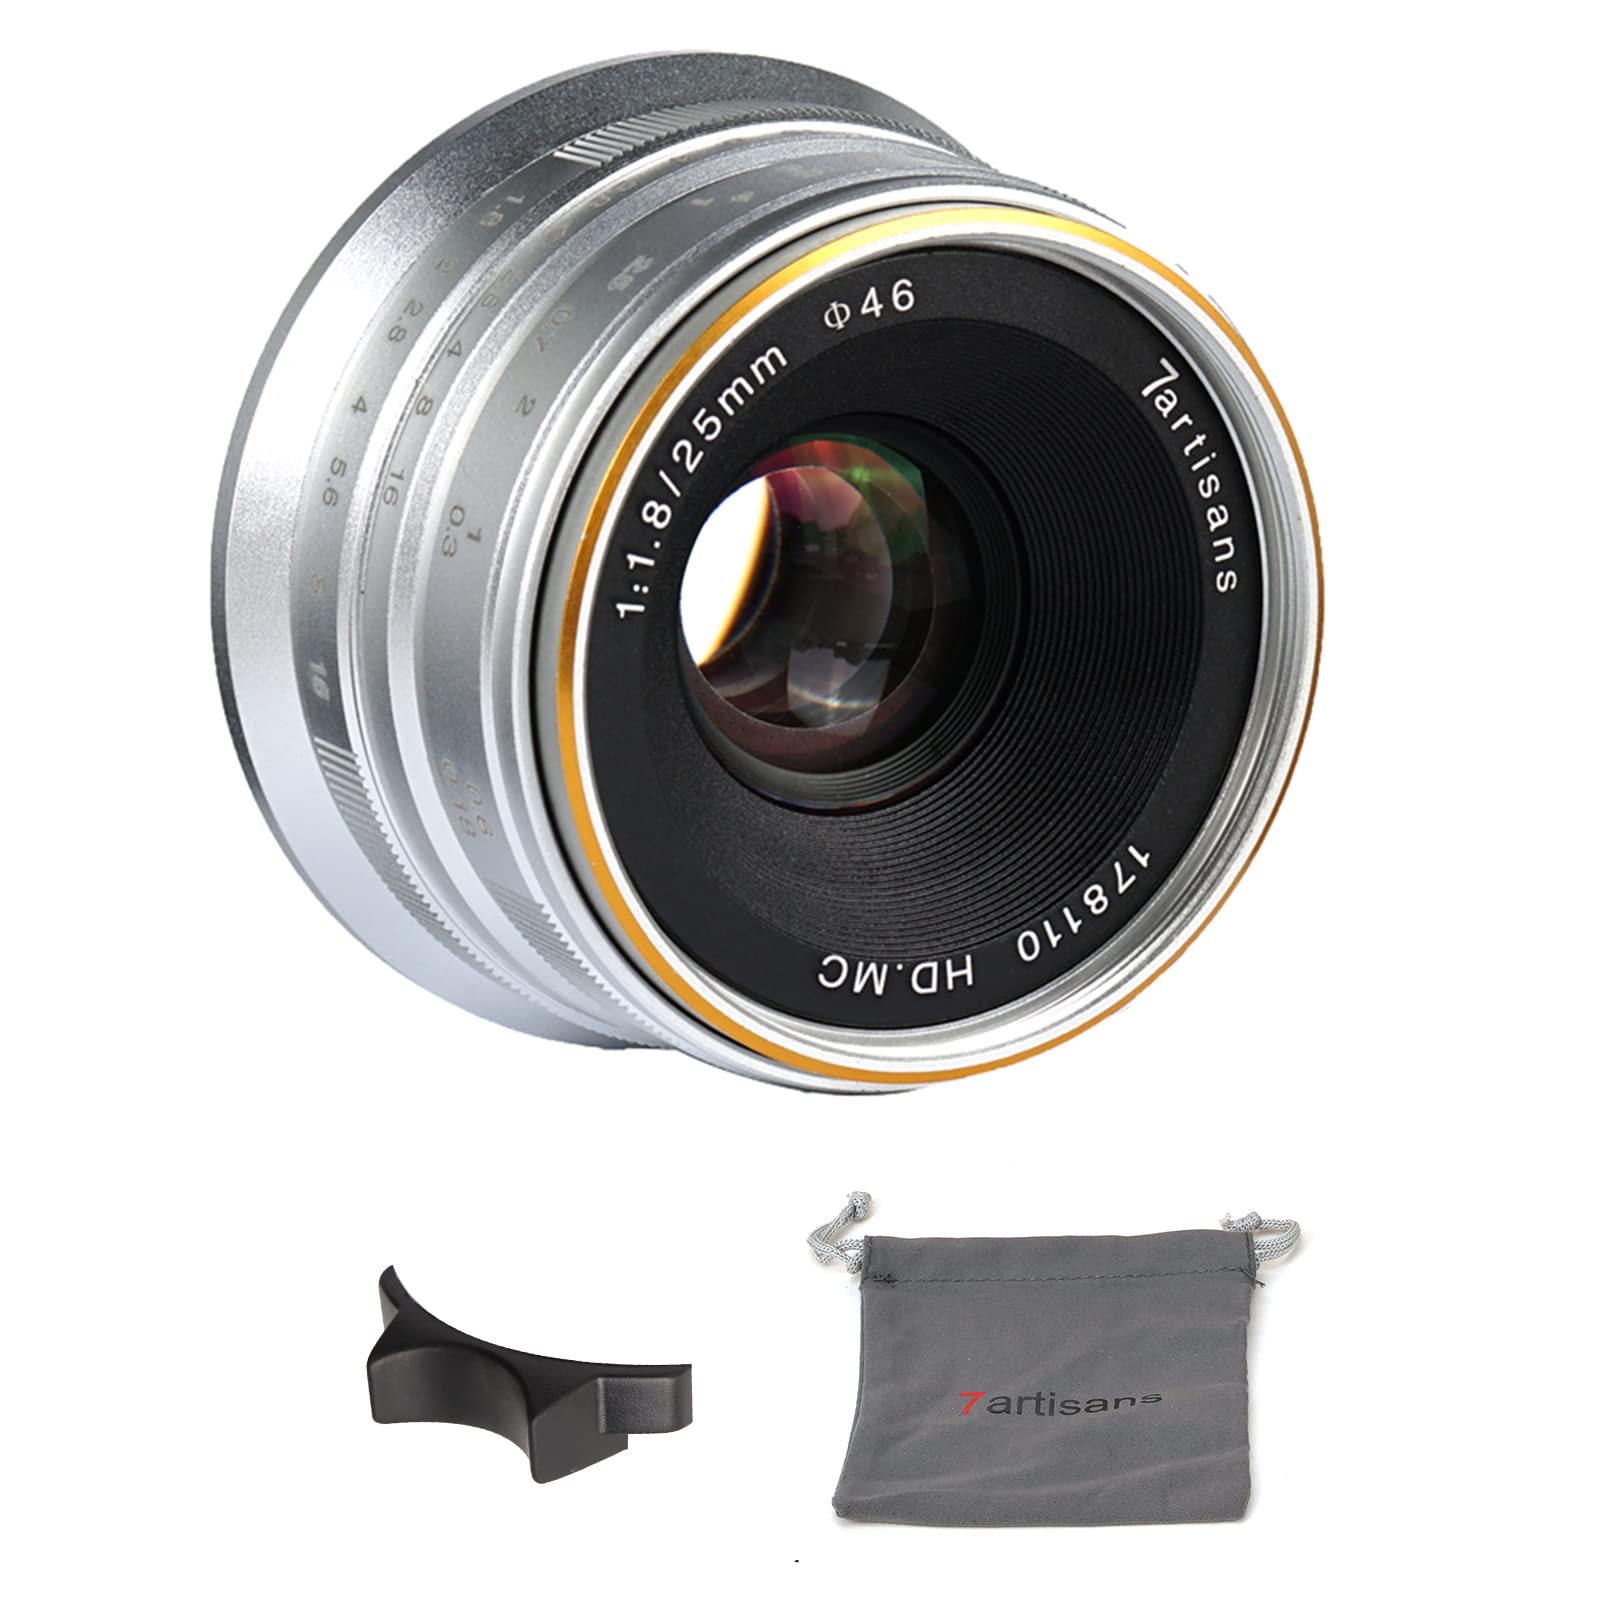 7artisans 25mm F1.8 Manueller Fokus Prime Fixiertes Objektiv für Olympus for Panasonic Micro Four Thirds MFT m4/3 Kameras - Silber